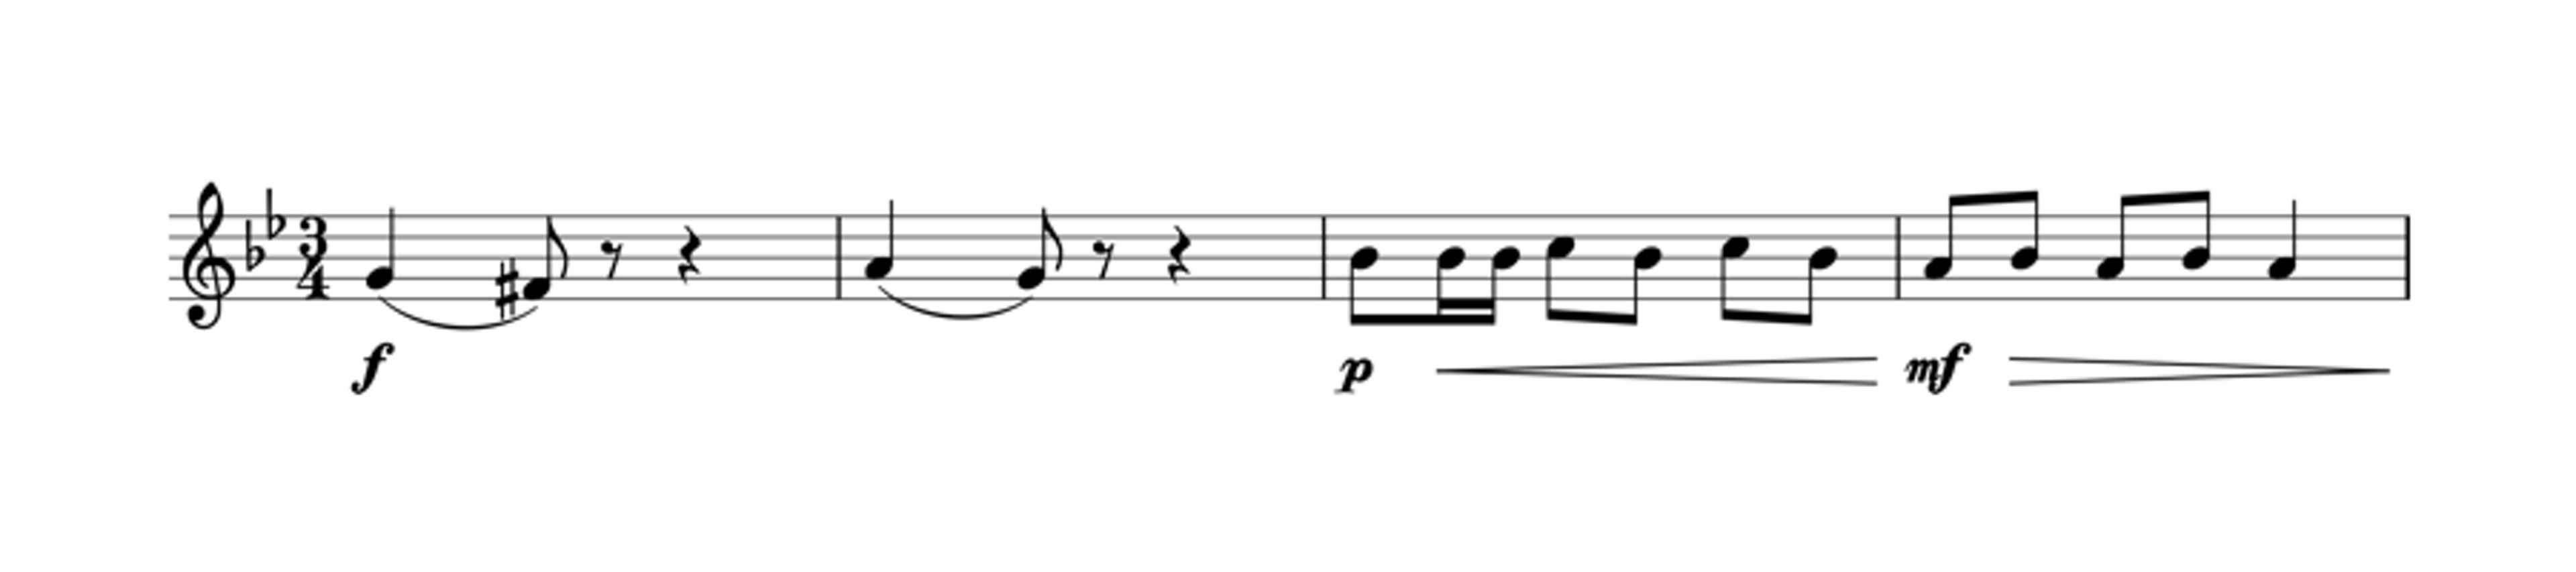 Dynamics in sheet music